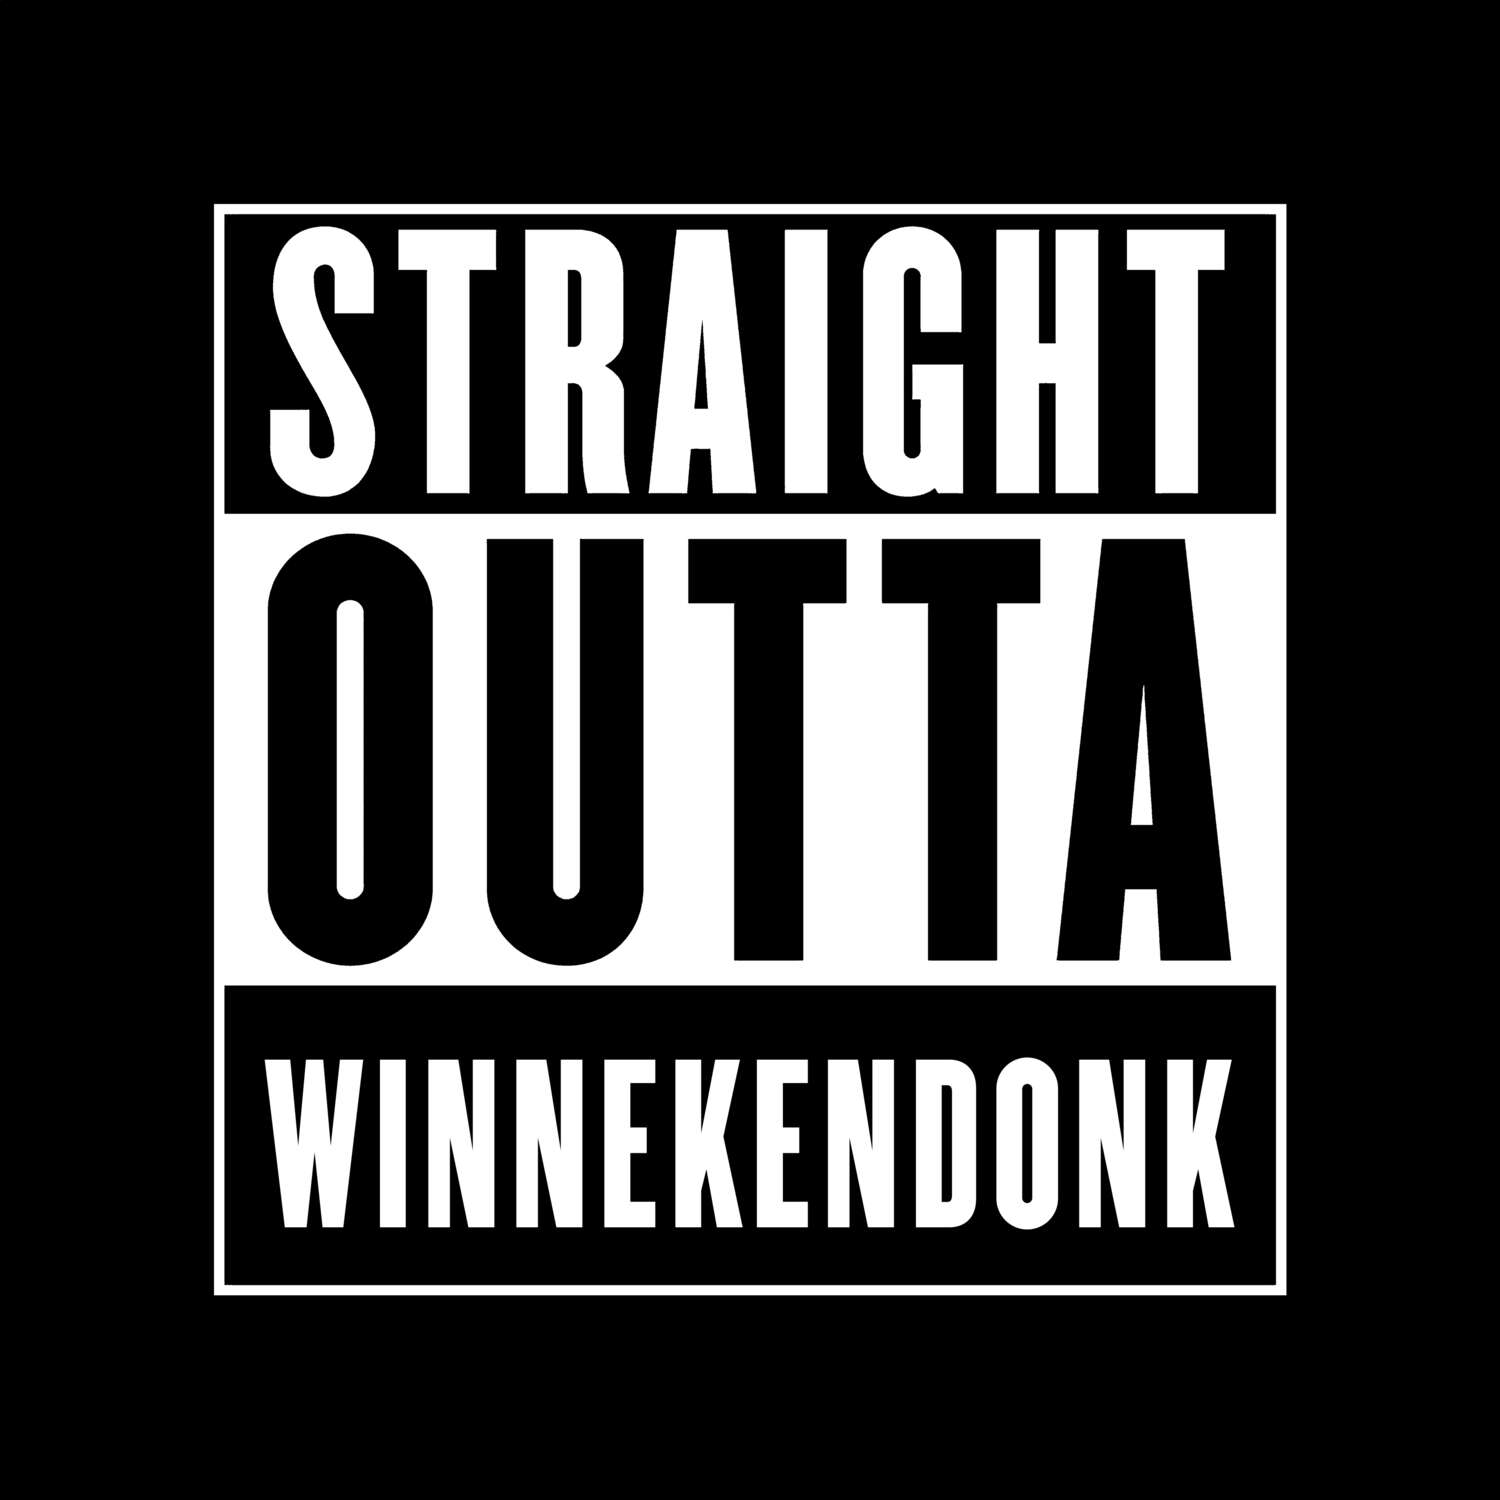 Winnekendonk T-Shirt »Straight Outta«